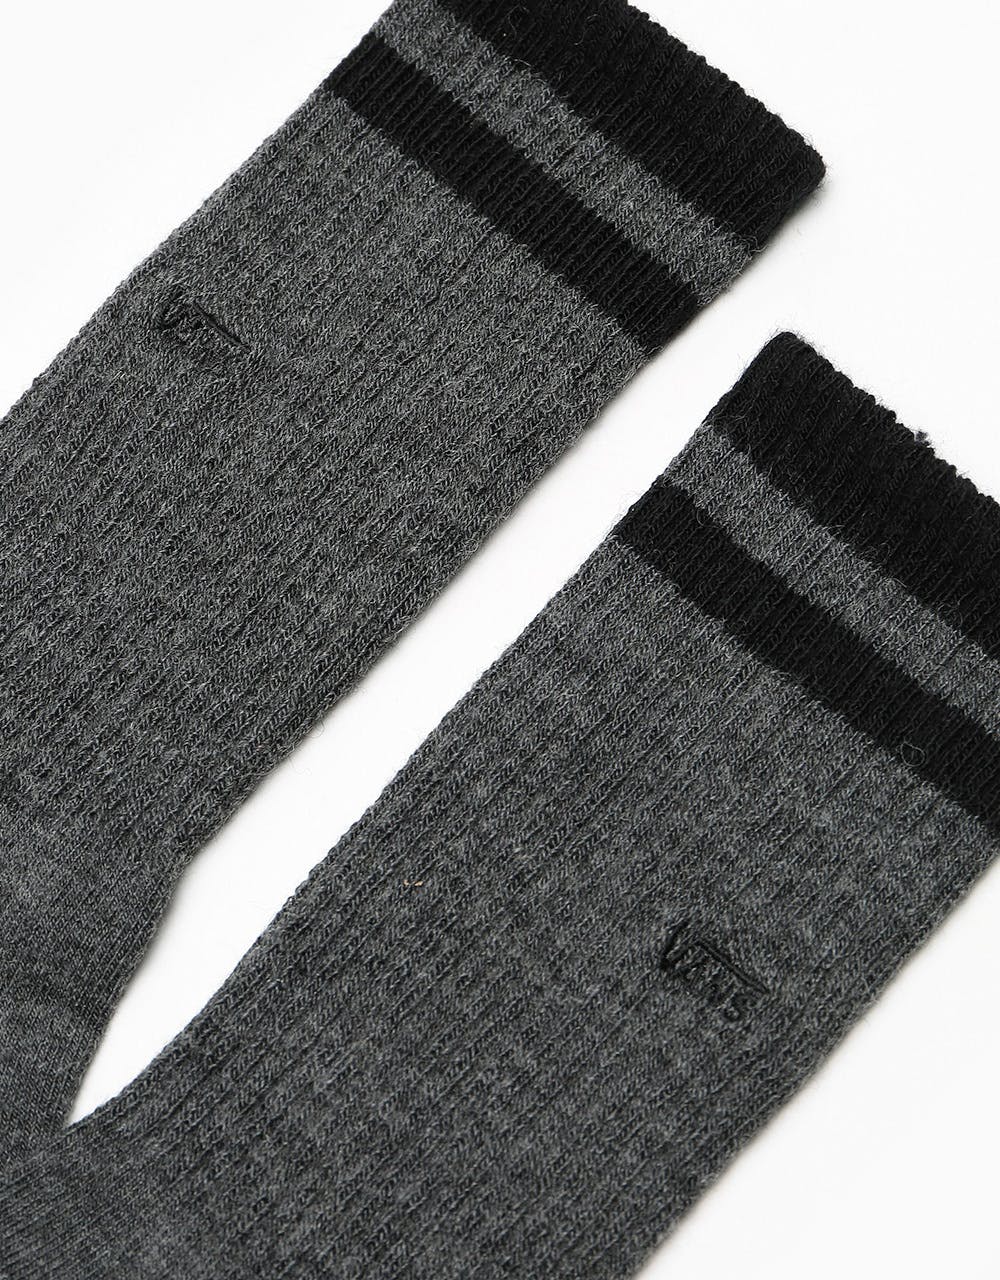 Vans Wool Blend Crew Socks - Asphalt